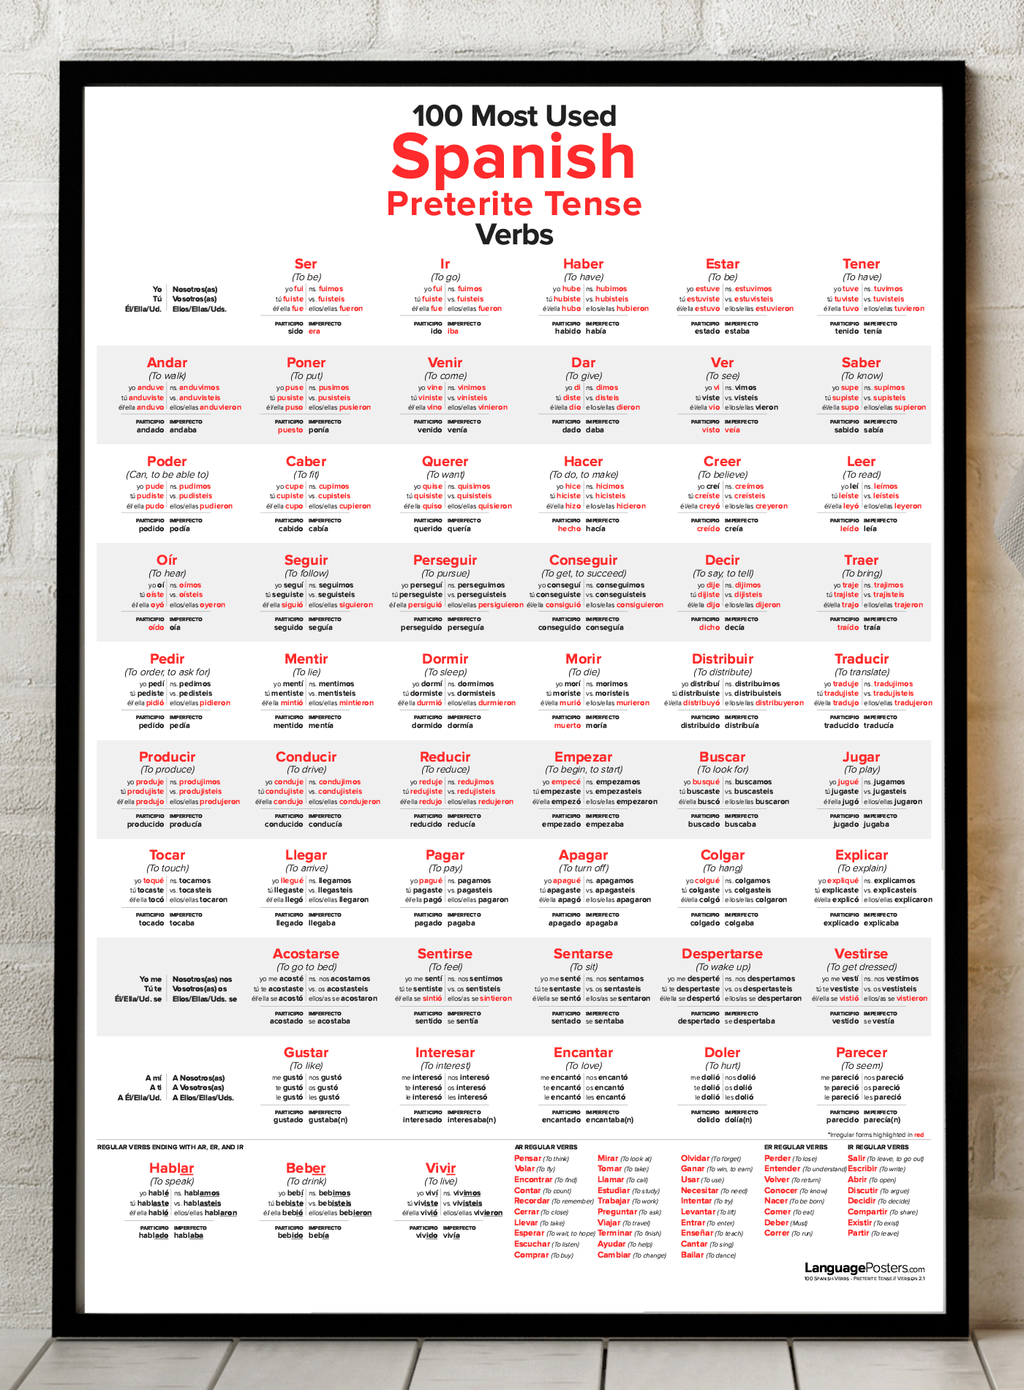 100 Most Used Spanish Preterite Tense Verbs Poster - LanguagePosters.com